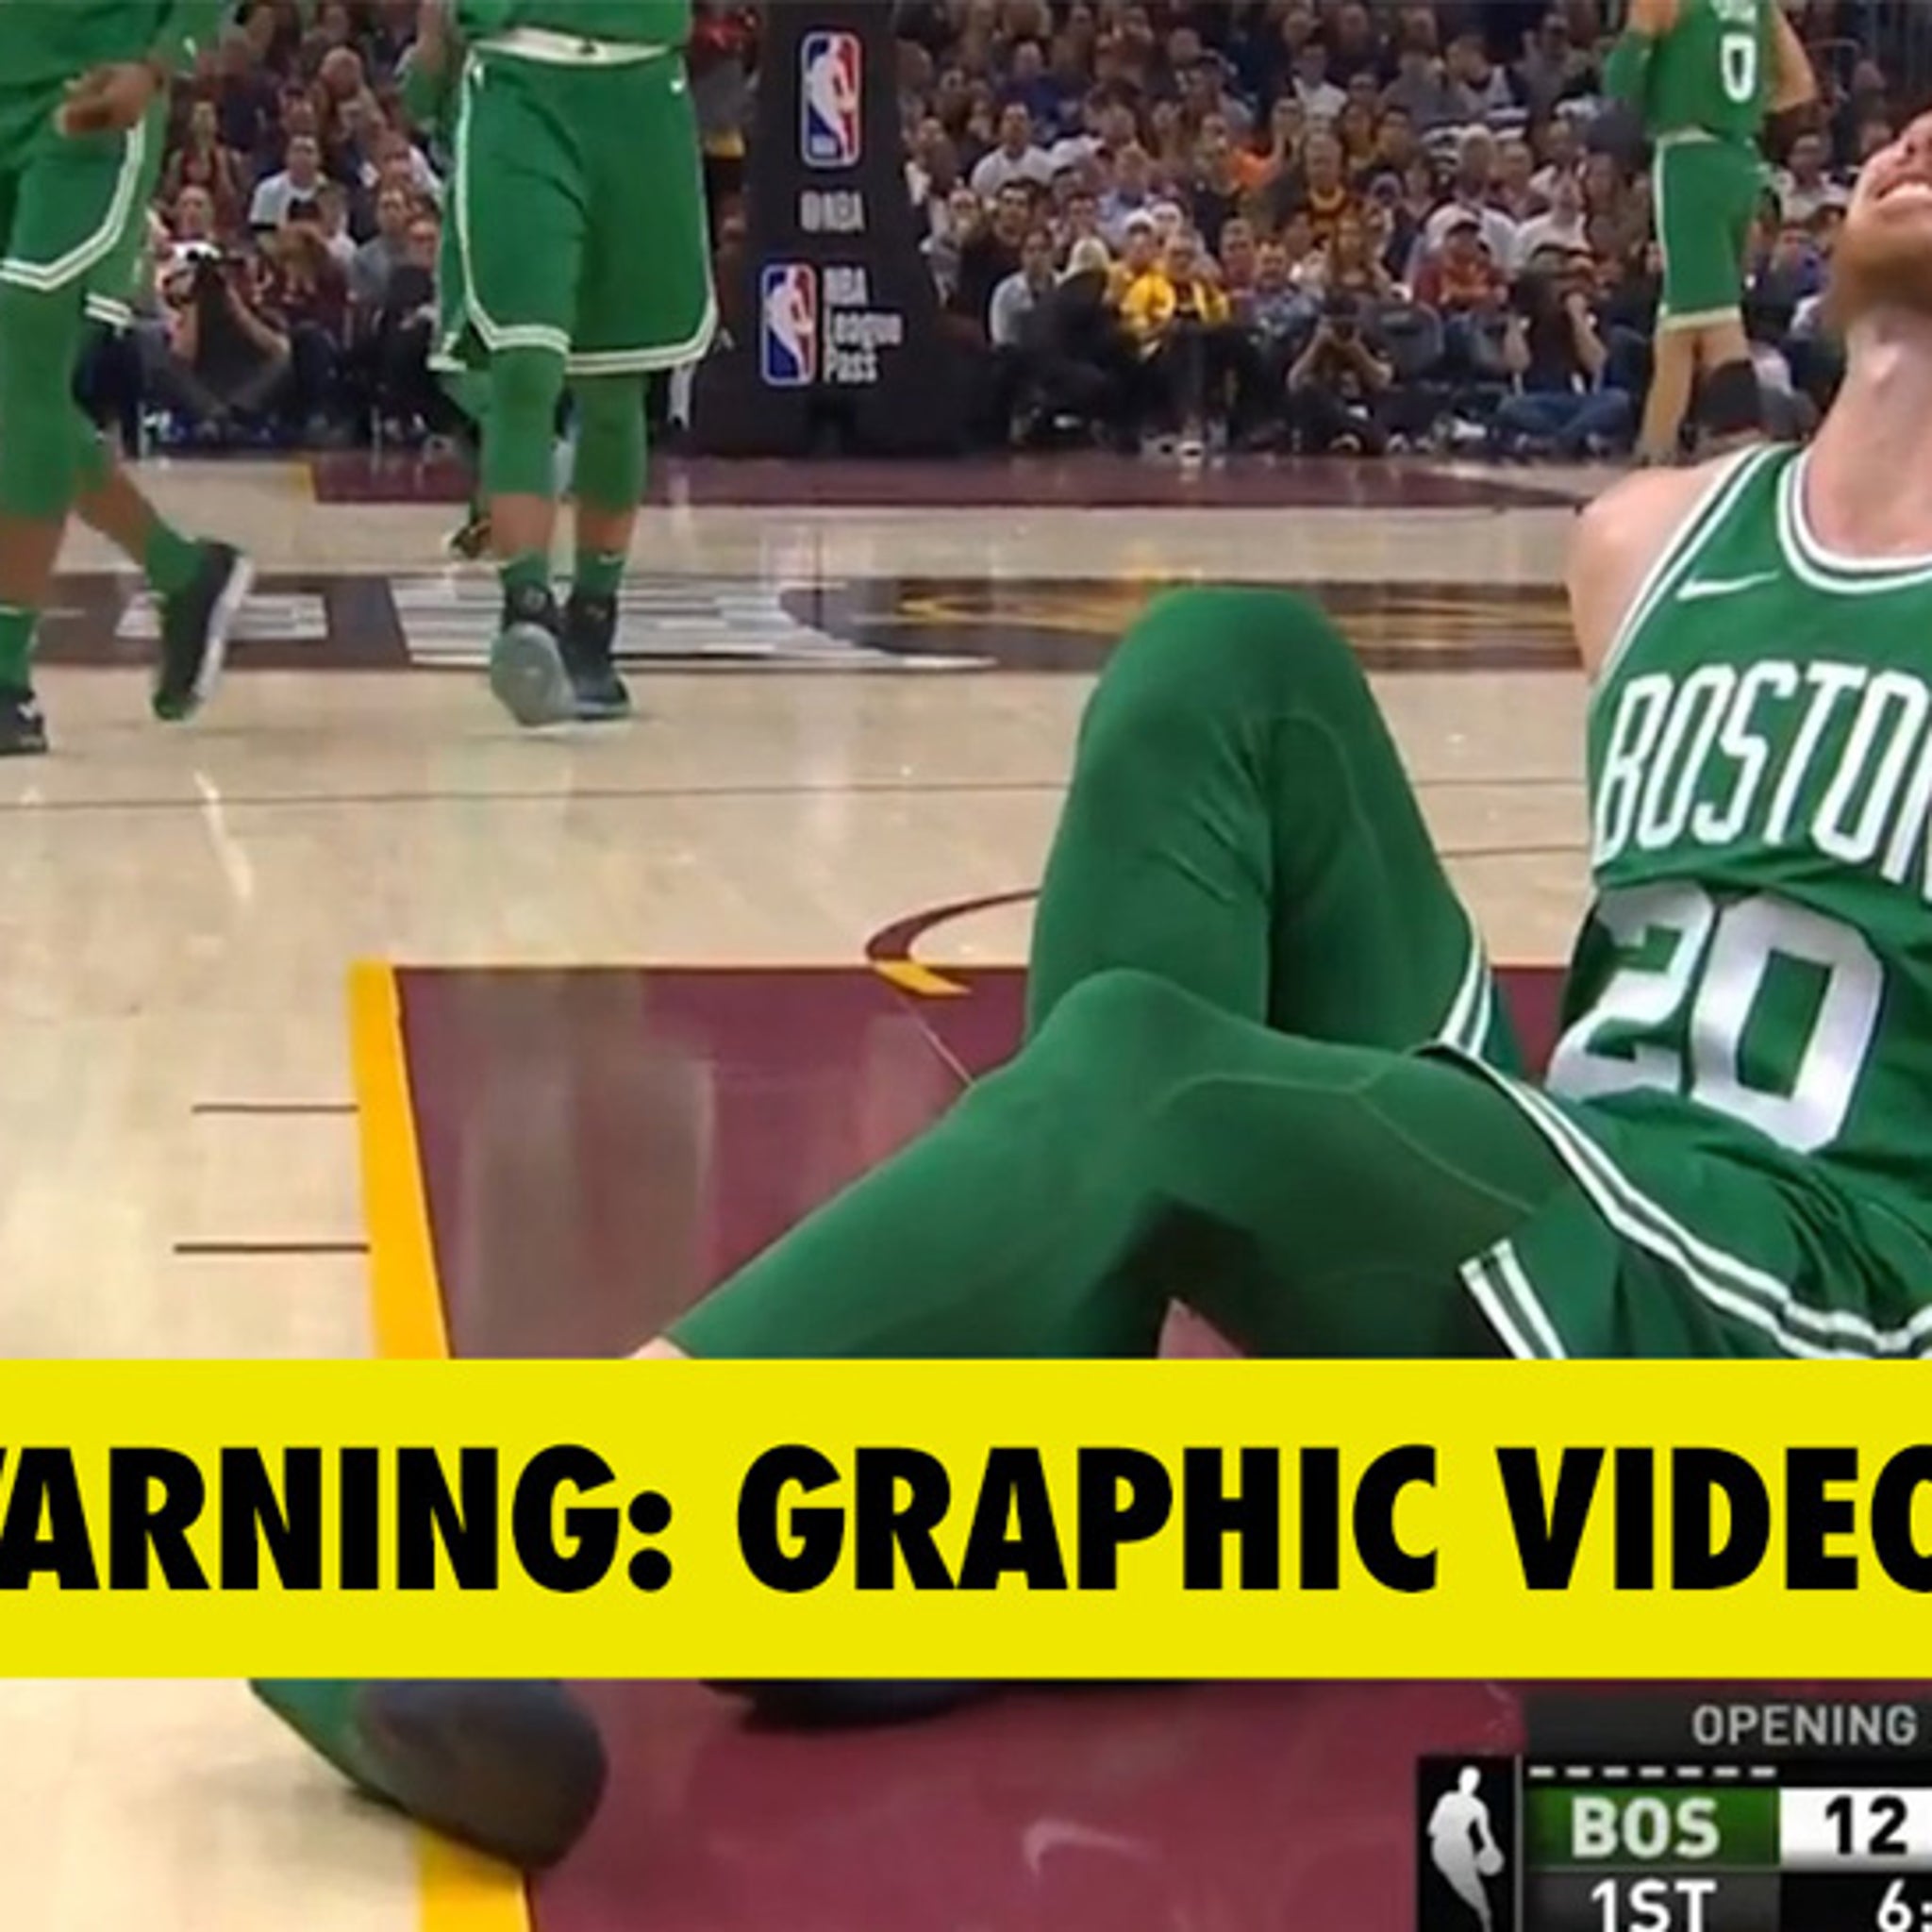 Celtics Gordon Hayward diagnosed with ankle sprain, will miss 4 weeks